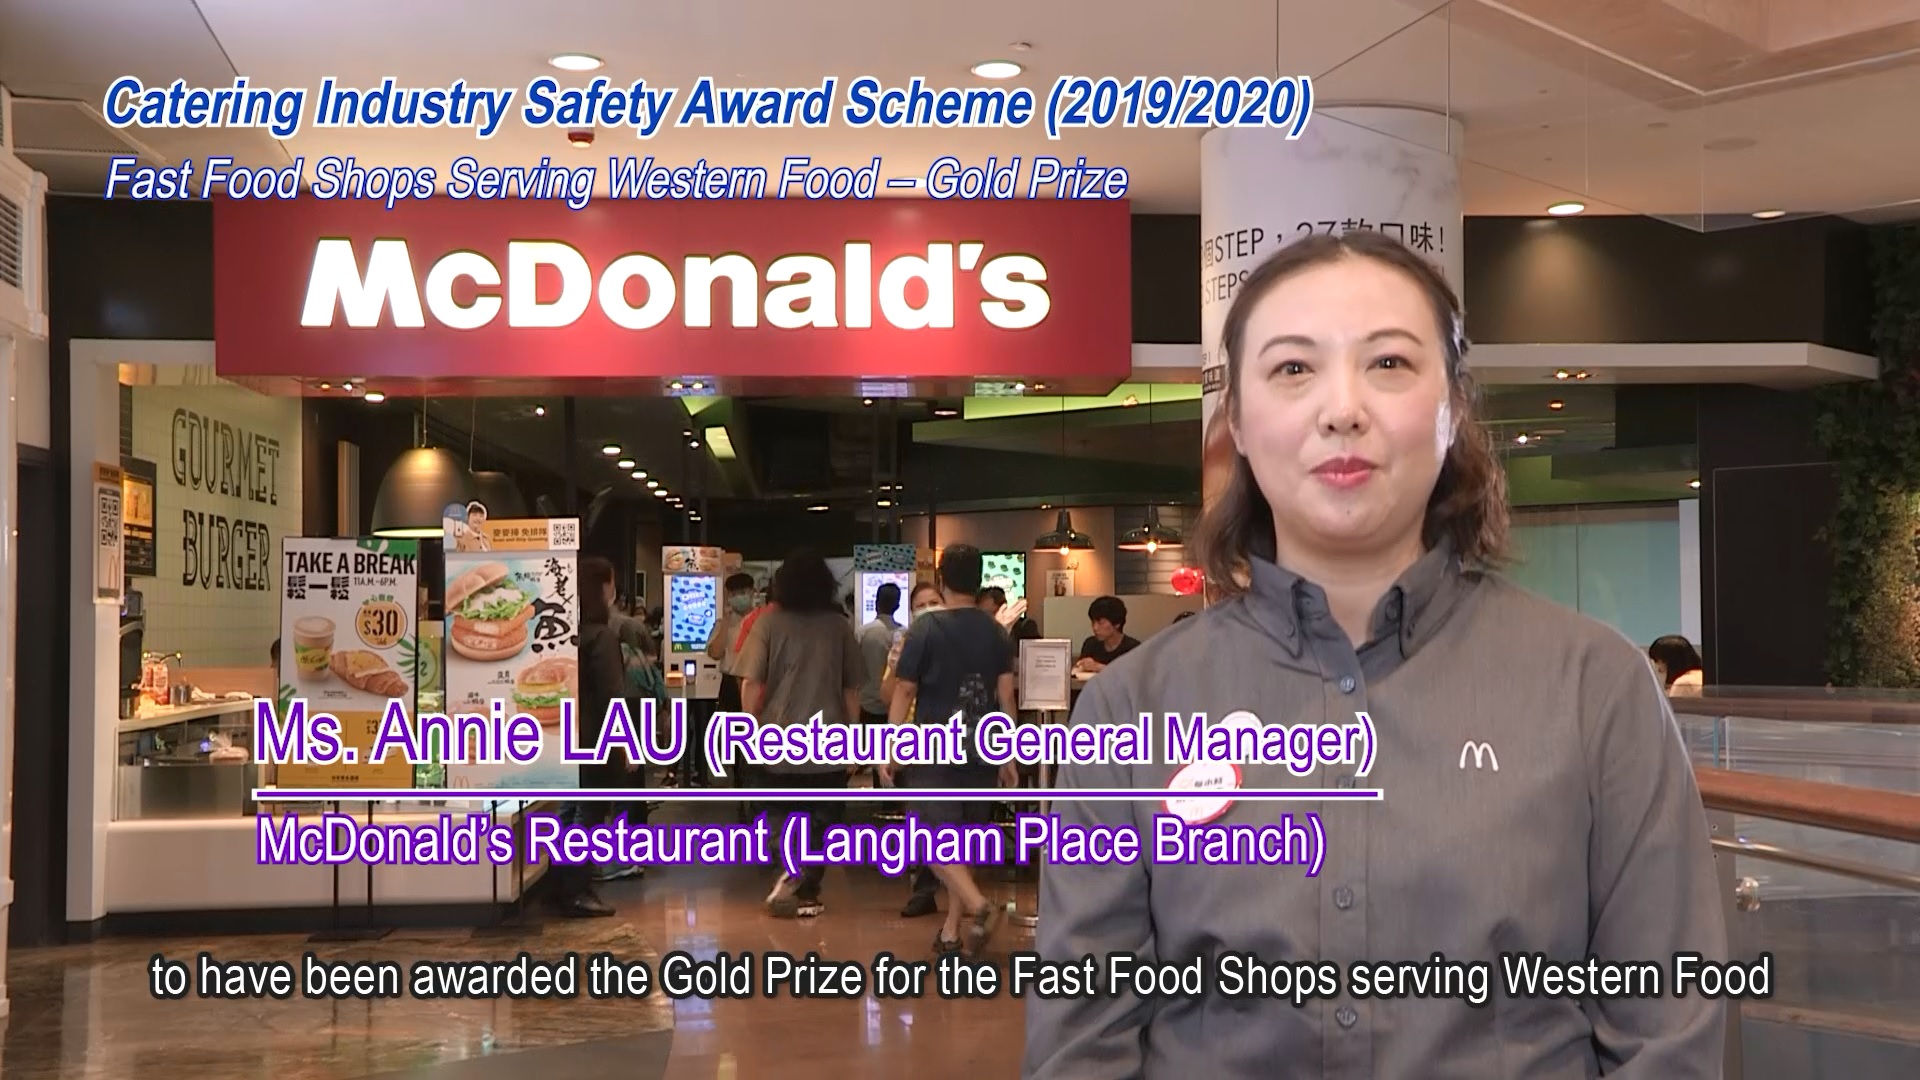 McDonald’s restaurant (Langham Place Branch) Fast Food Shops serving Western Food Sub-category